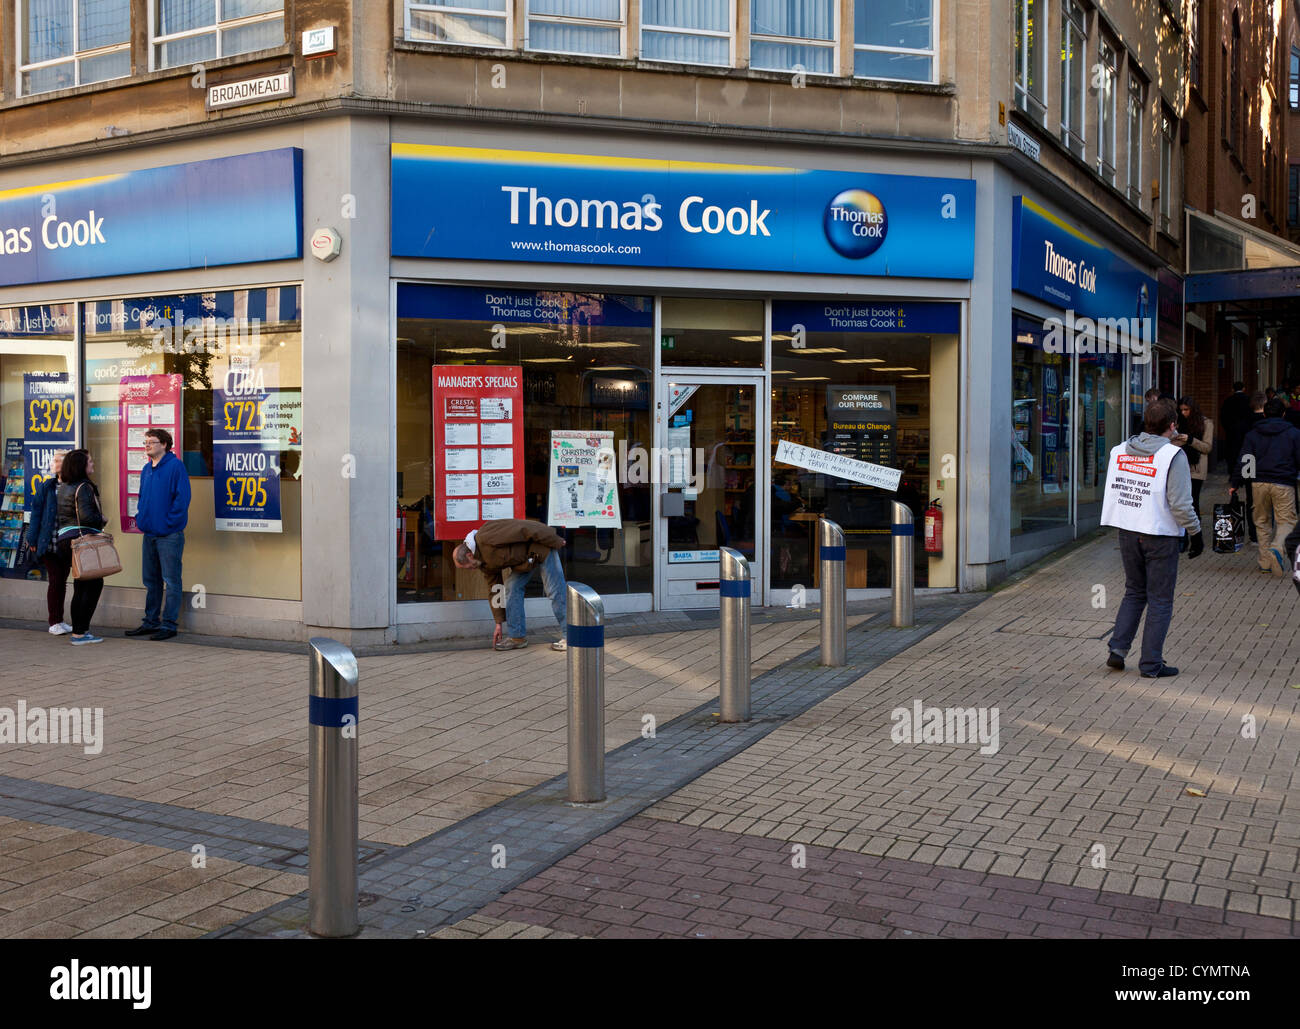 Thomas Cook Reisebüros und Bureau de Change, Urlaub Ladengeschäft lagern Broadmead, Bristol, England, UK. Stockfoto